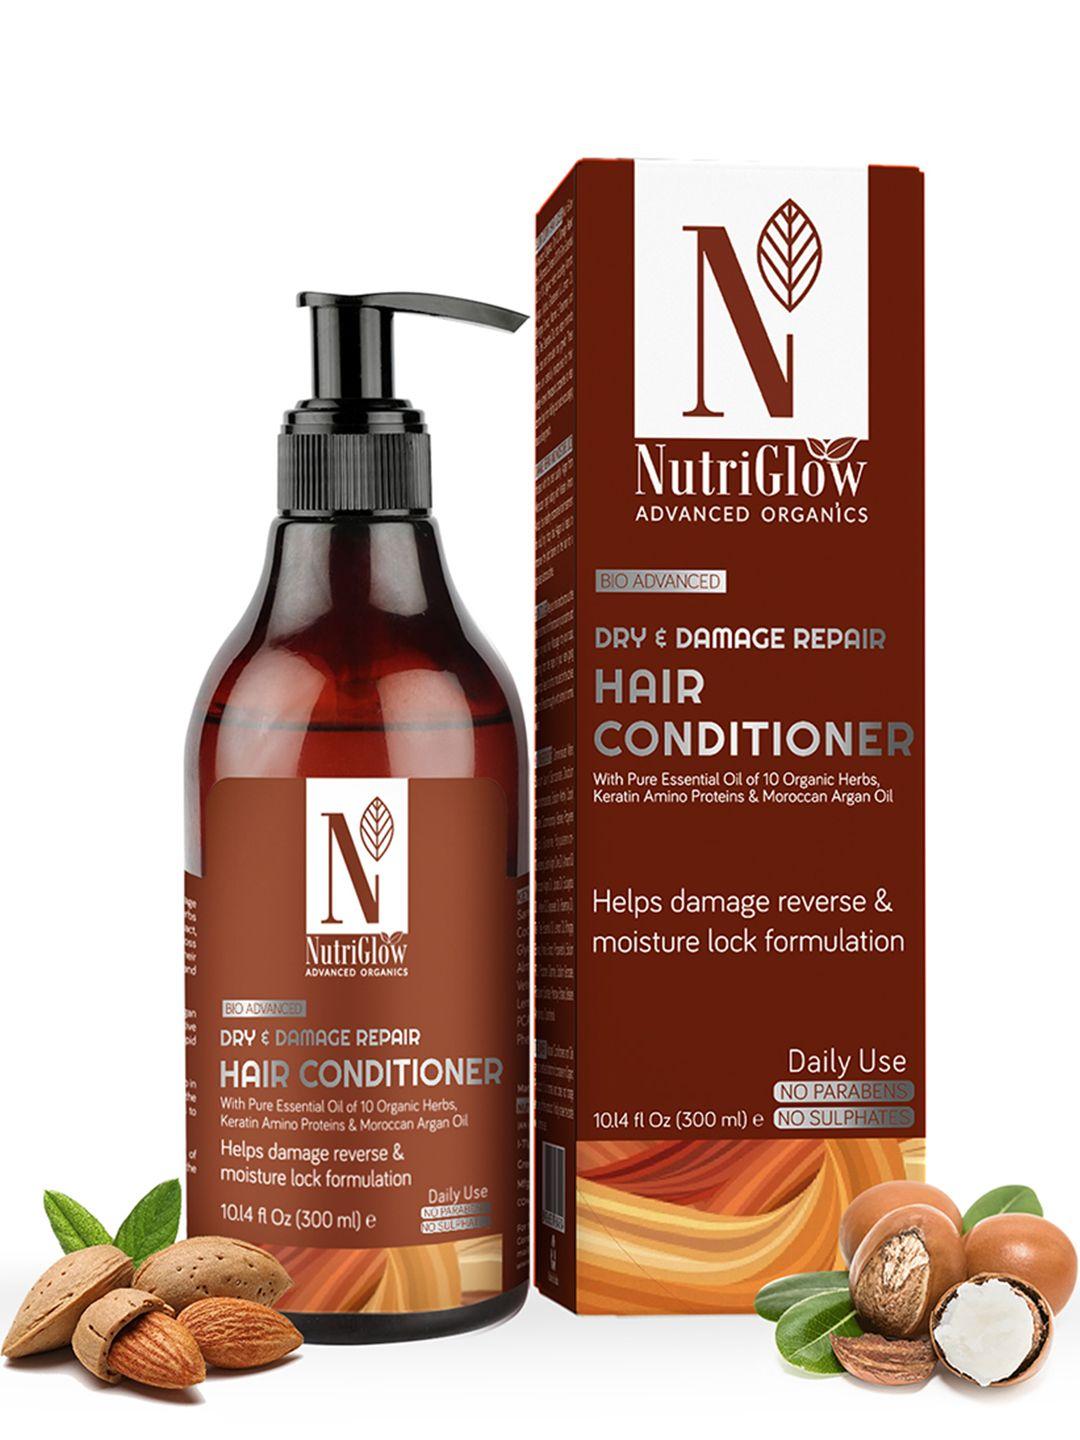 nutriglow-advanced-organics-sustainable-bio-daily-use-dry-damage-repair-hair-conditioner-300-ml